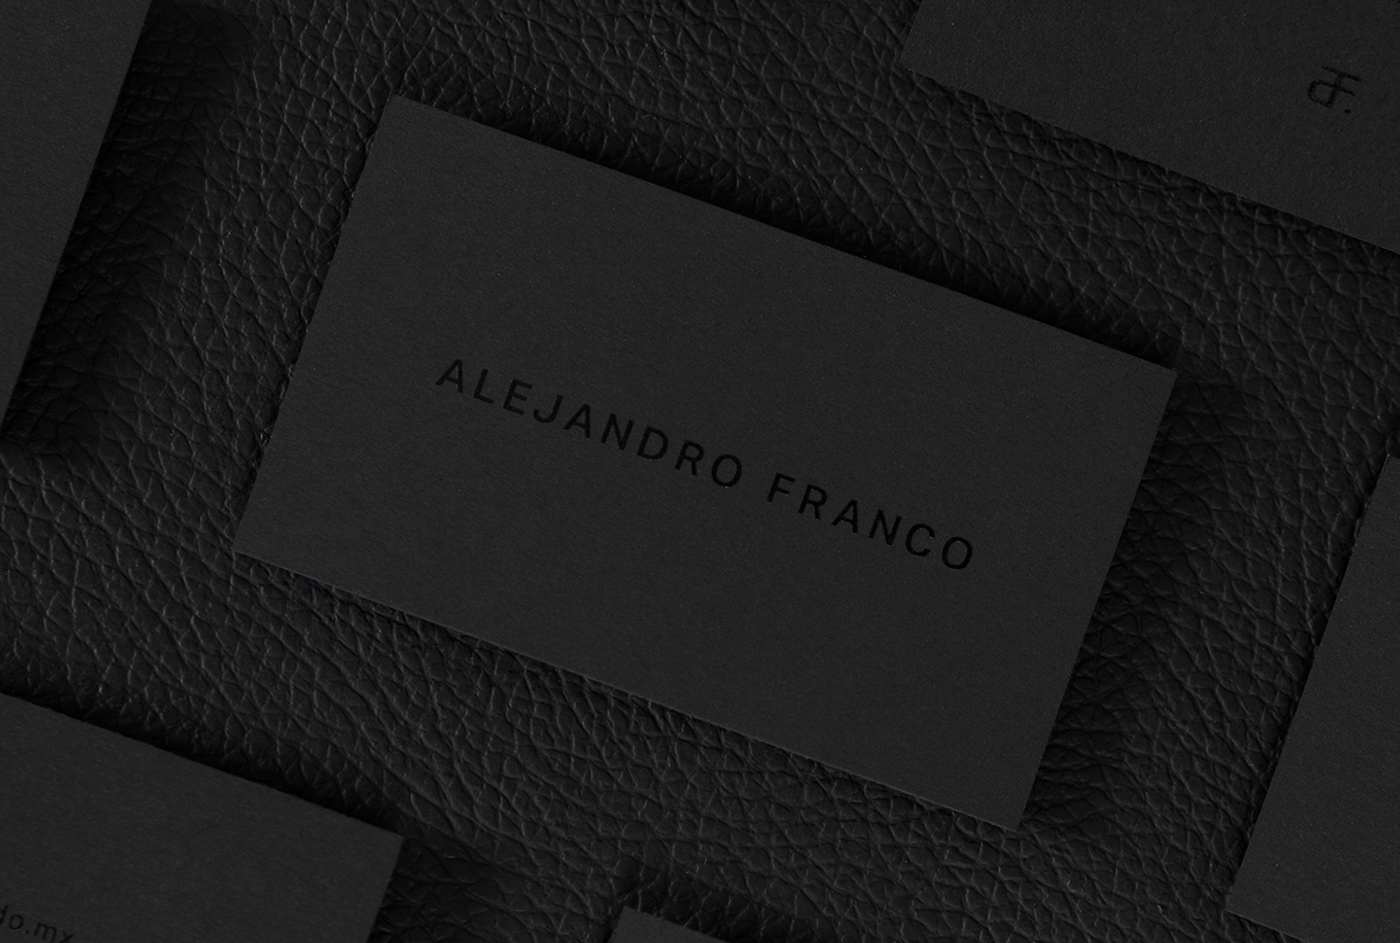 alejandro franco Warp dj identity brand logo symbol mark black night